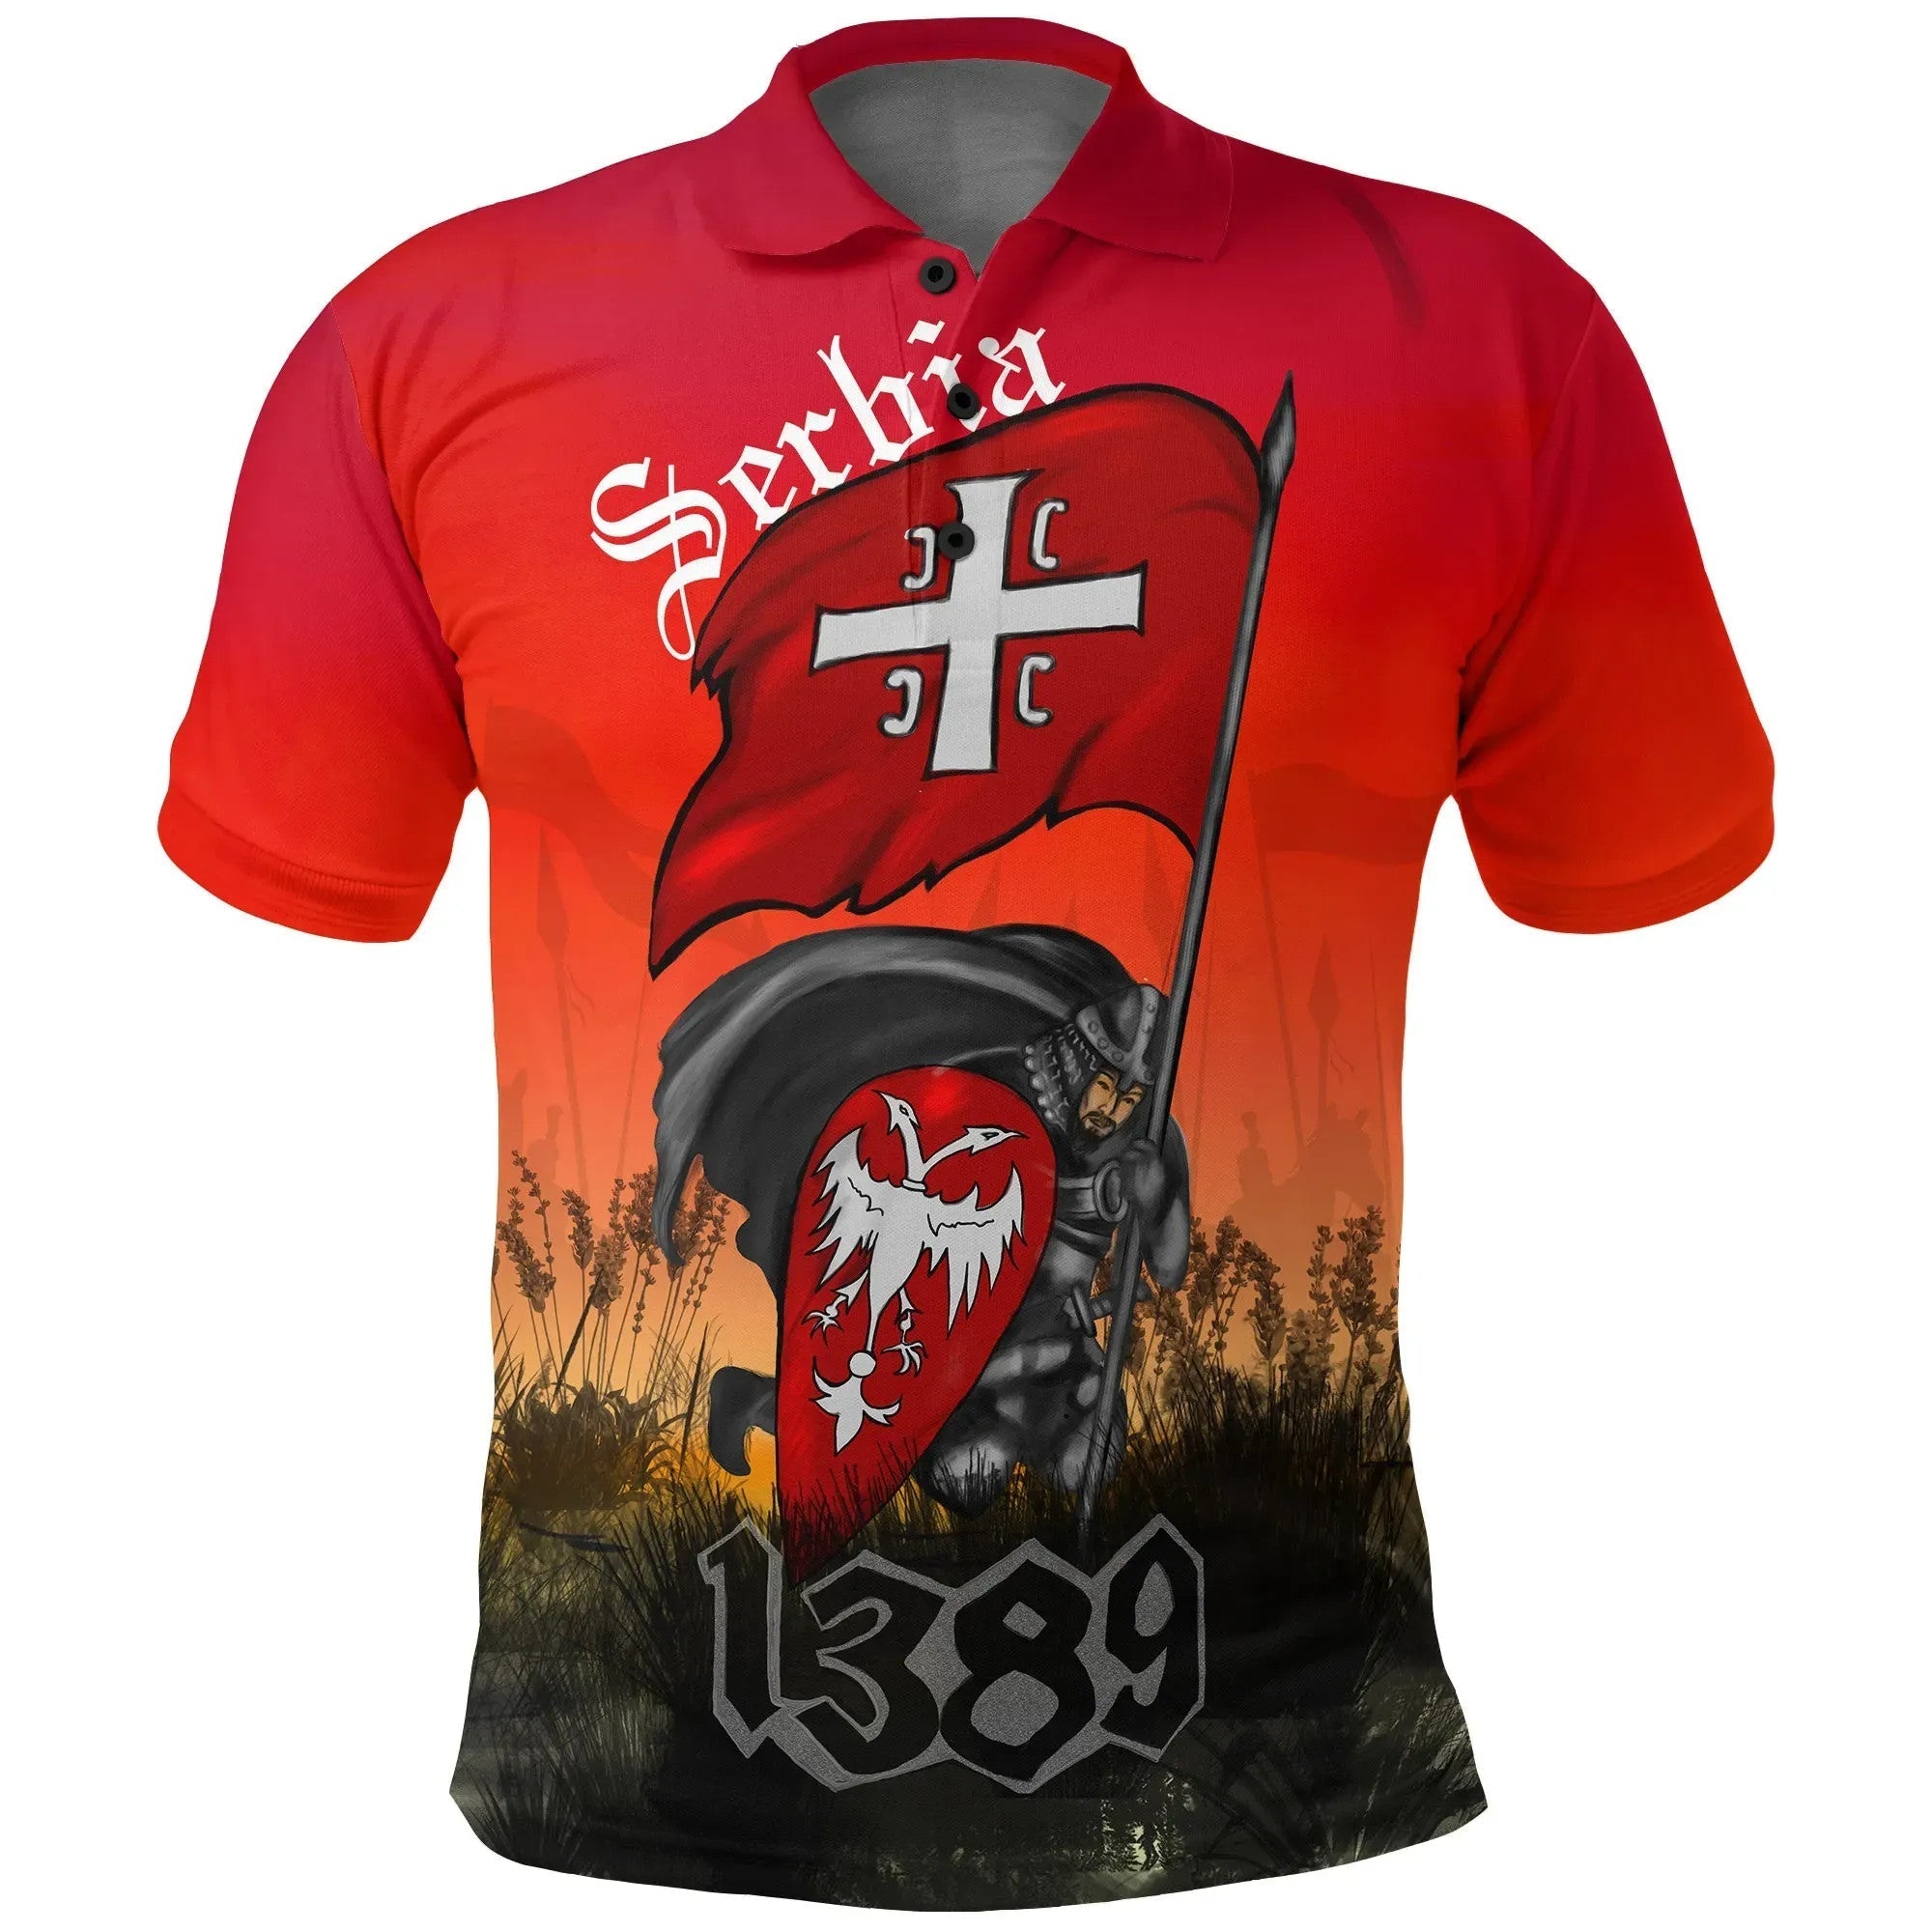 serbia-polo-shirt-1389